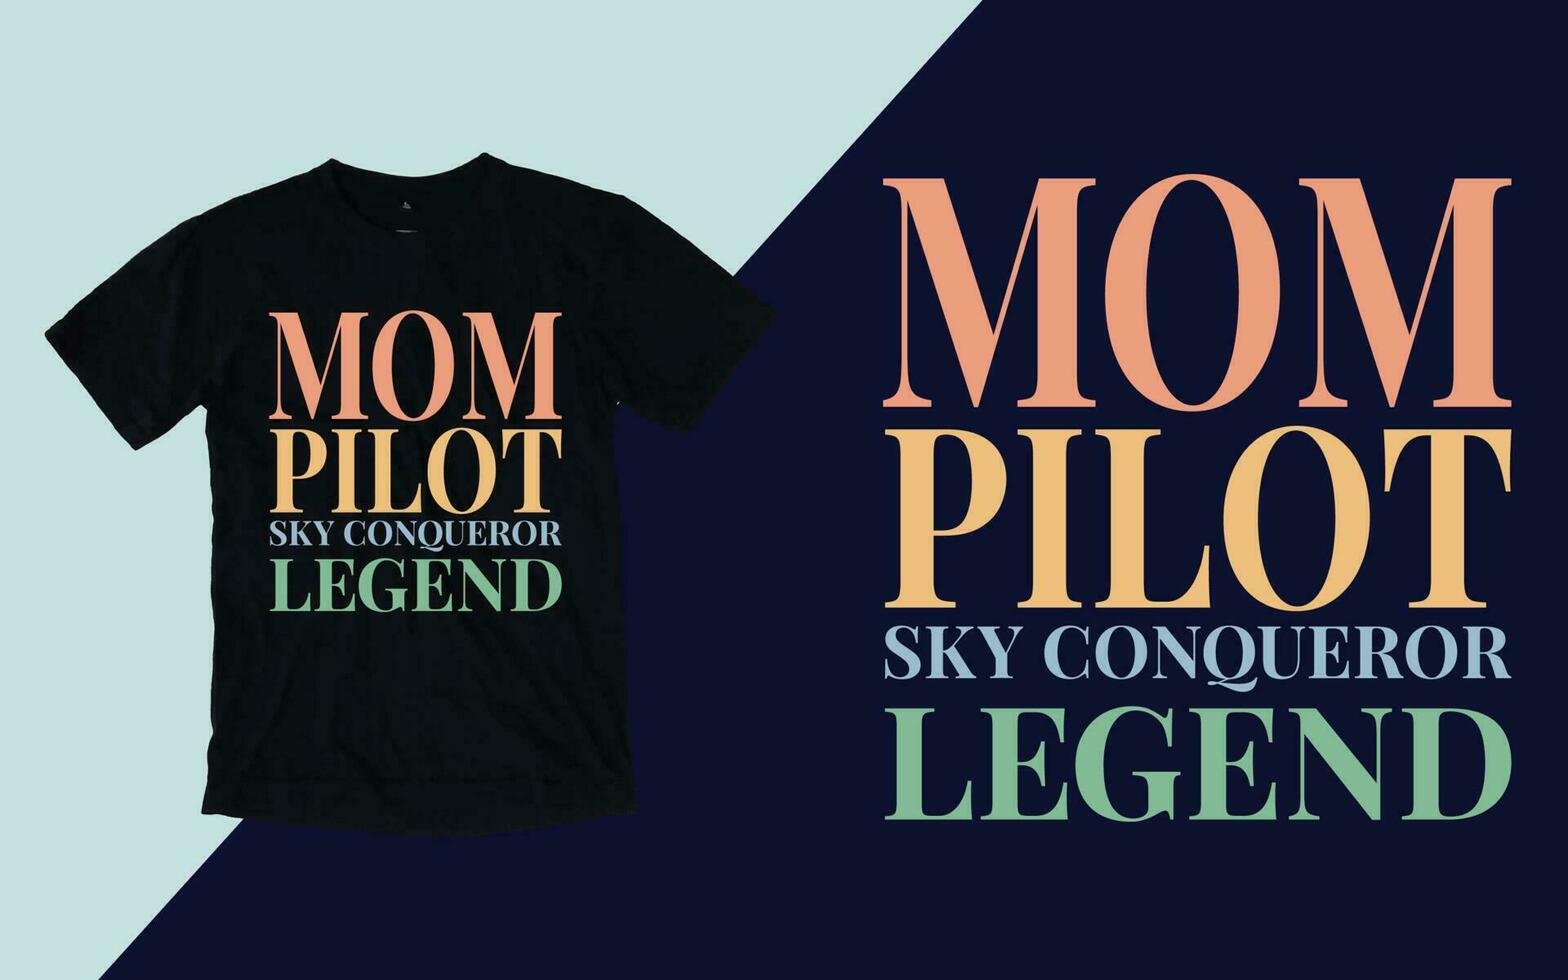 Mom Pilot Sky Conqueror Legend, Mother's Day T shirt vector